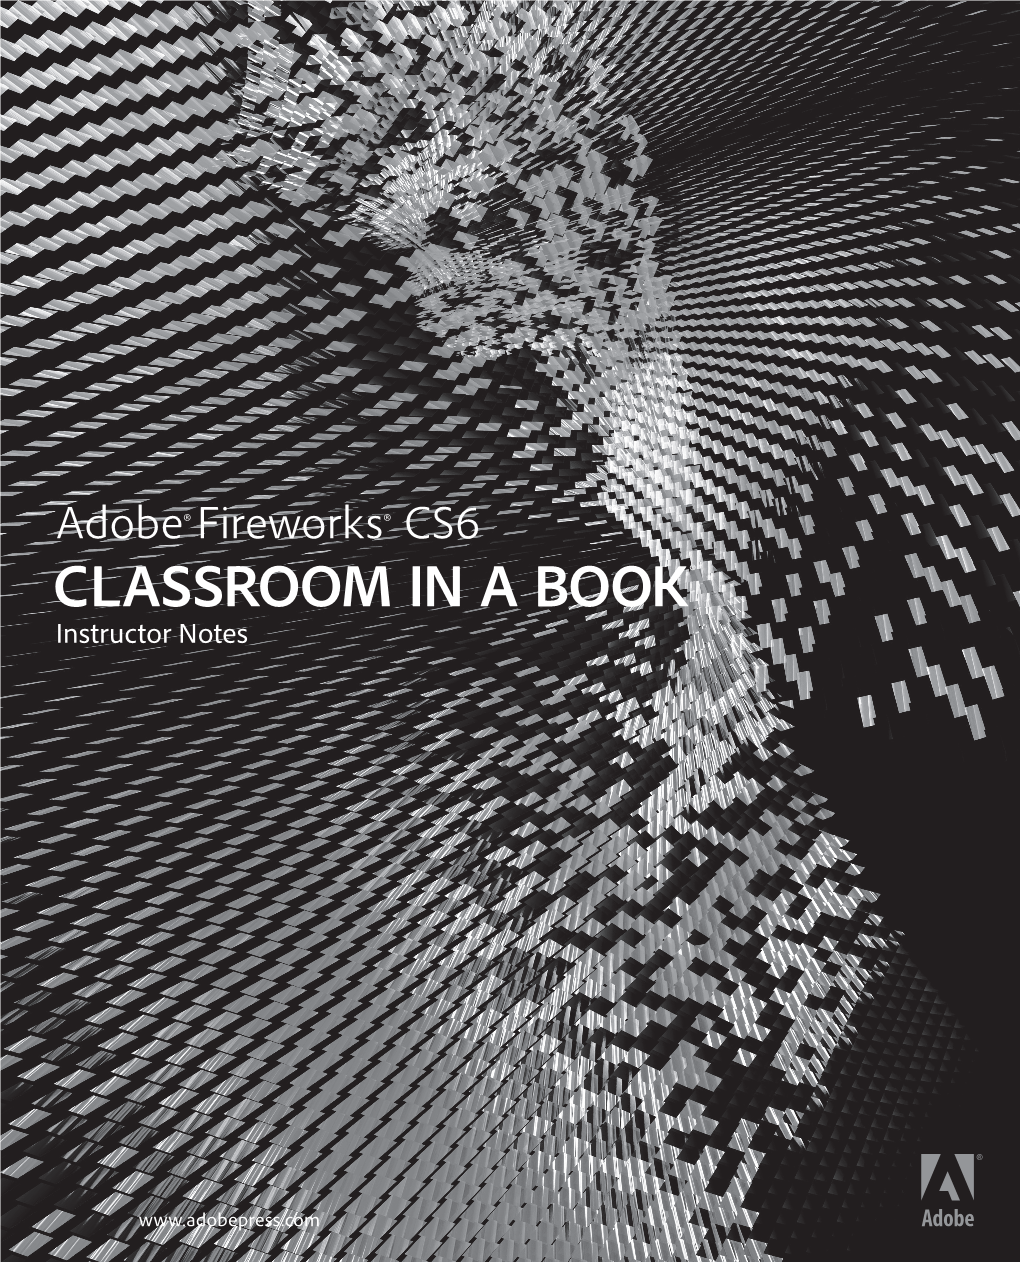 Adobe Fireworks CS6 Classroom in a Book, ©2012 Adobe Systems